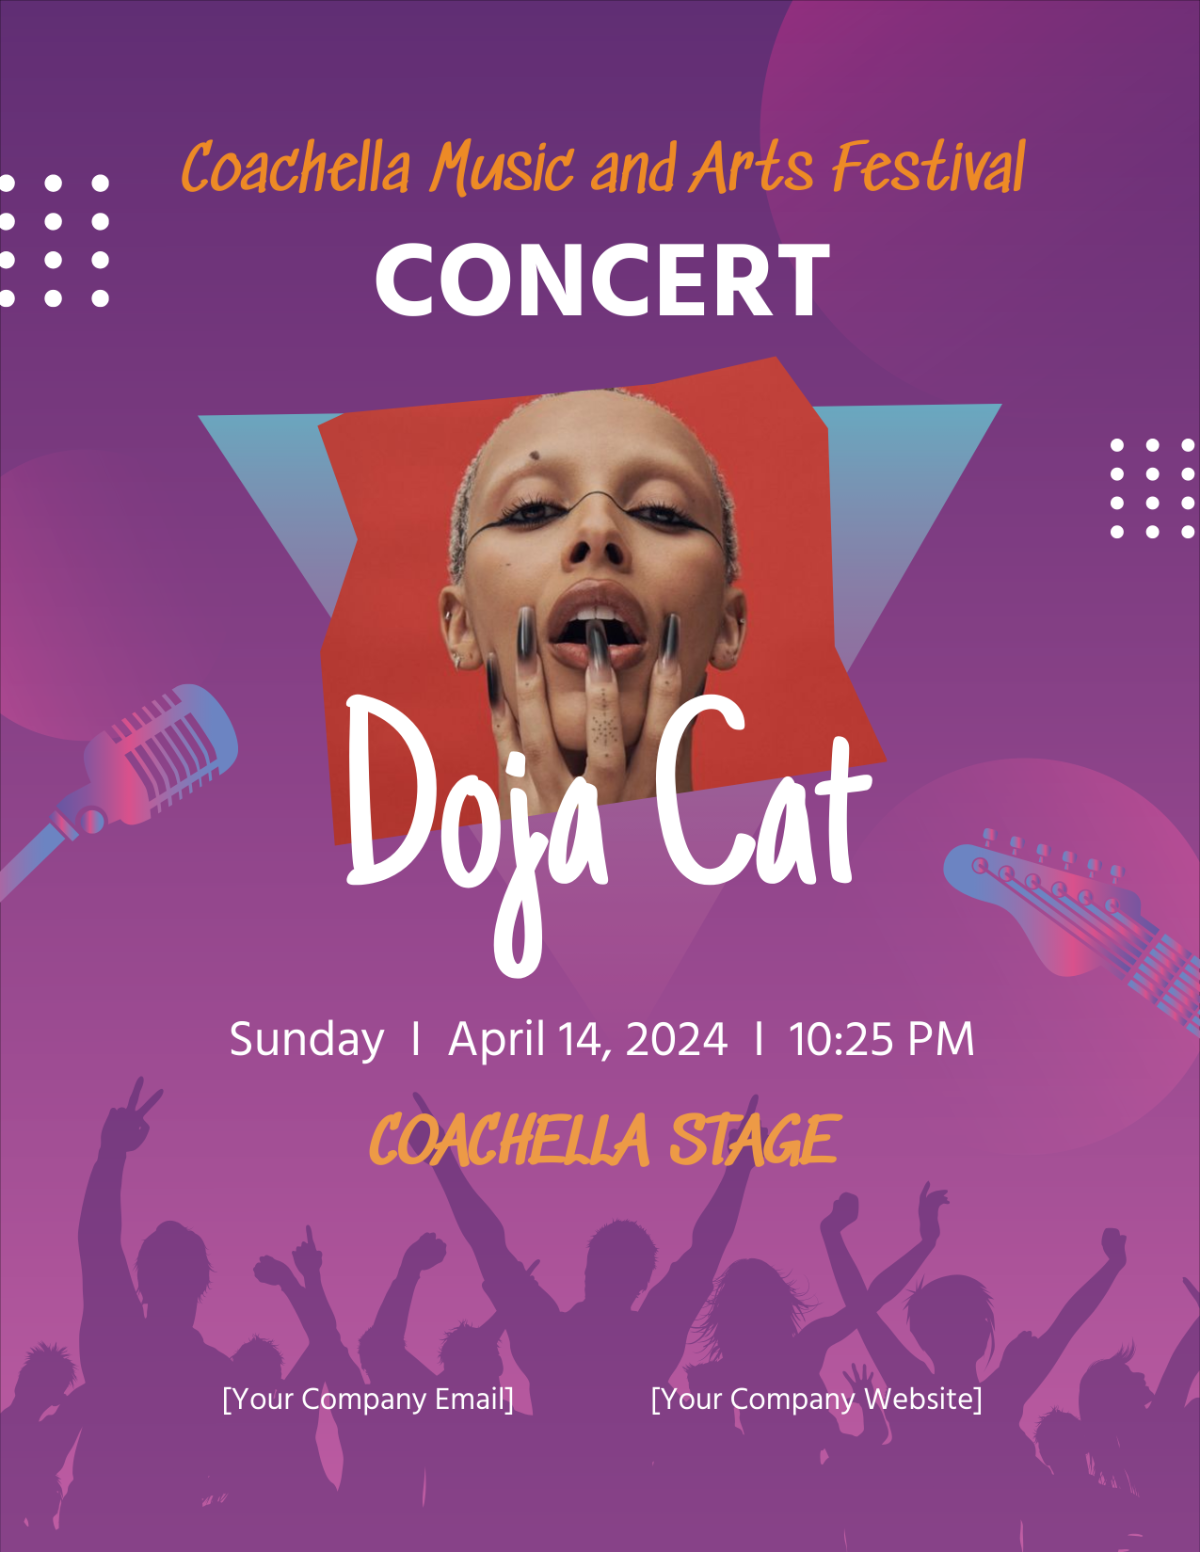 Coachella Concert Schedule Template